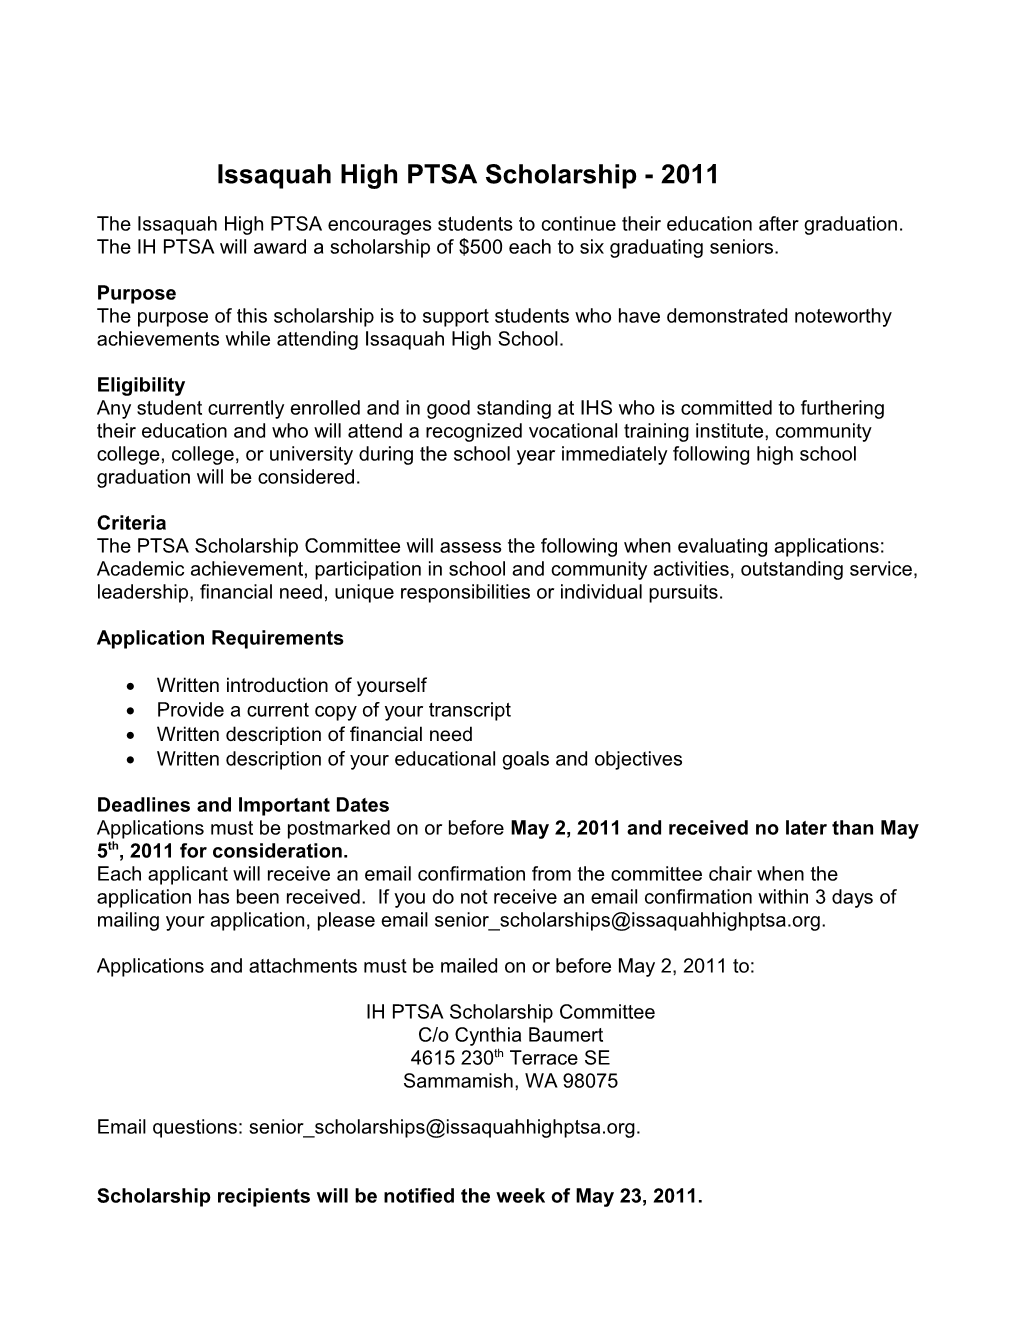 Issaquah High School PTSA Scholarship